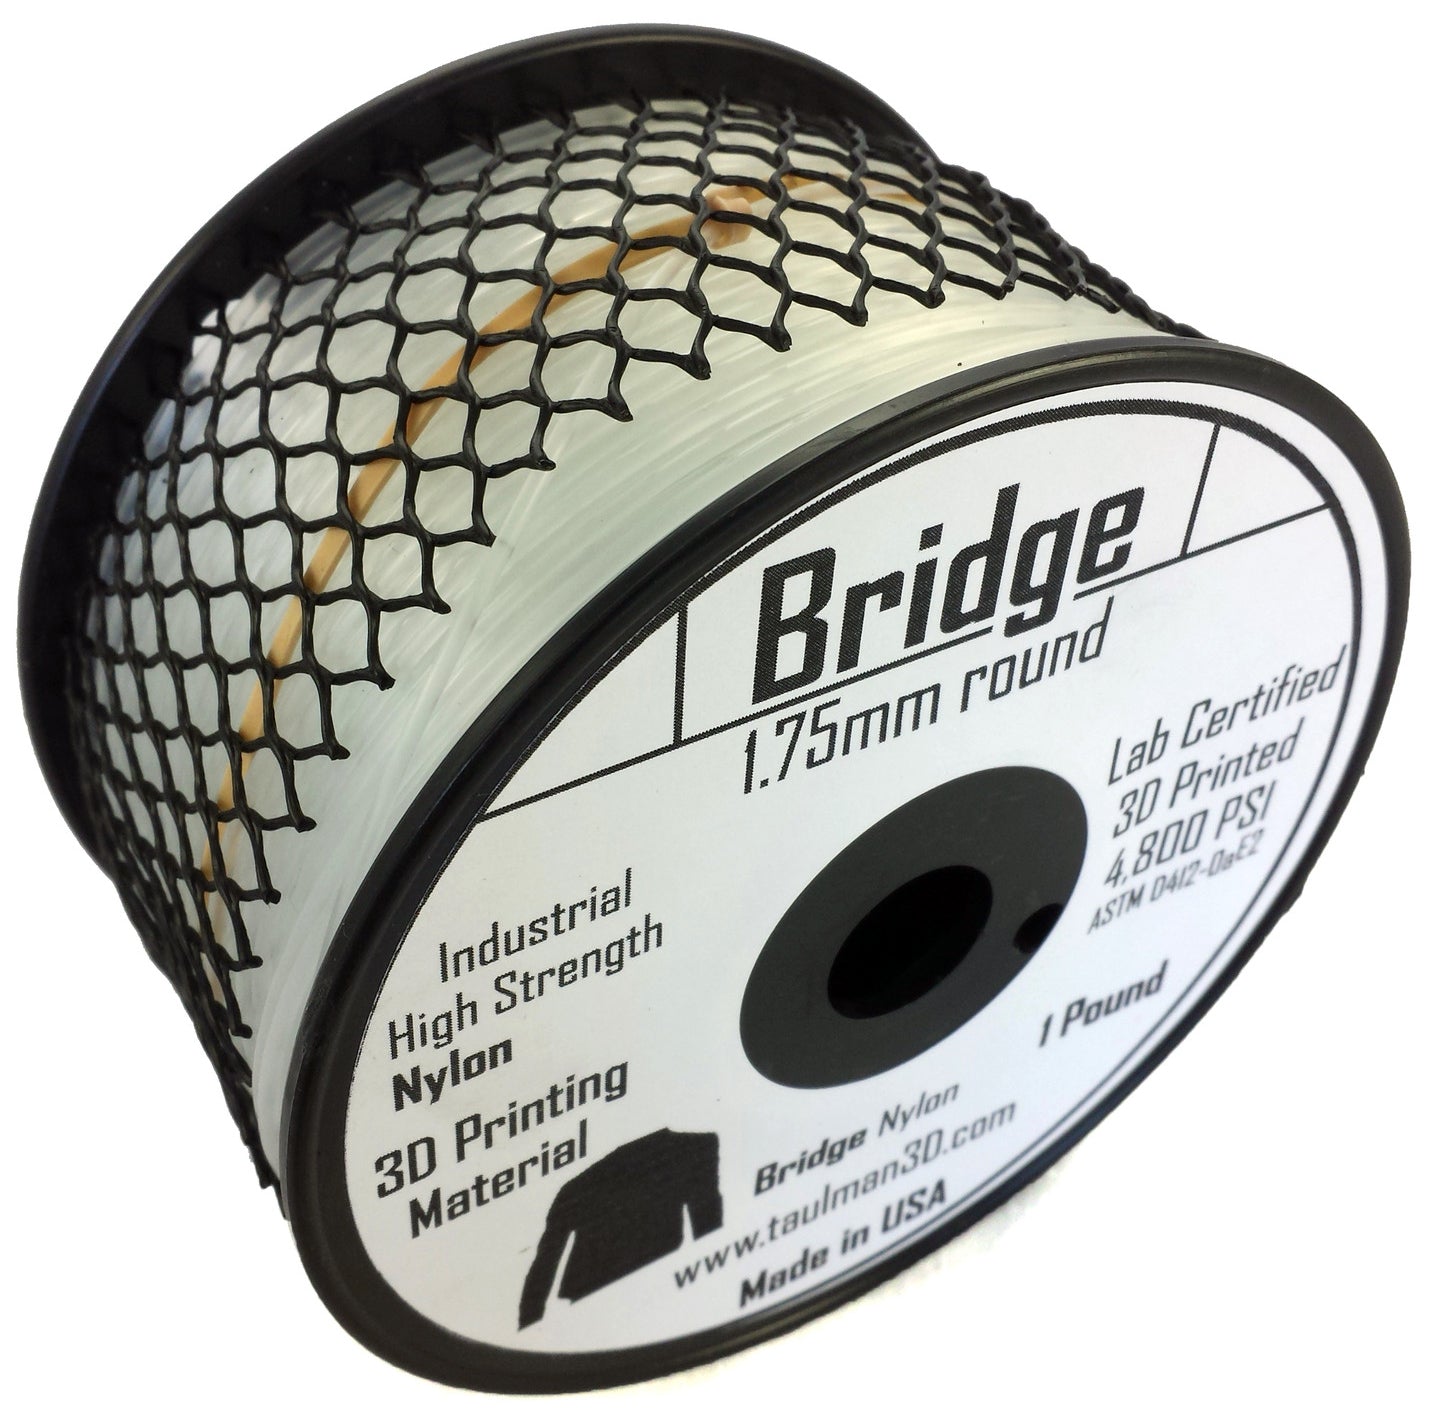 Bridge Nylon 1.75mm filament by Taulmans